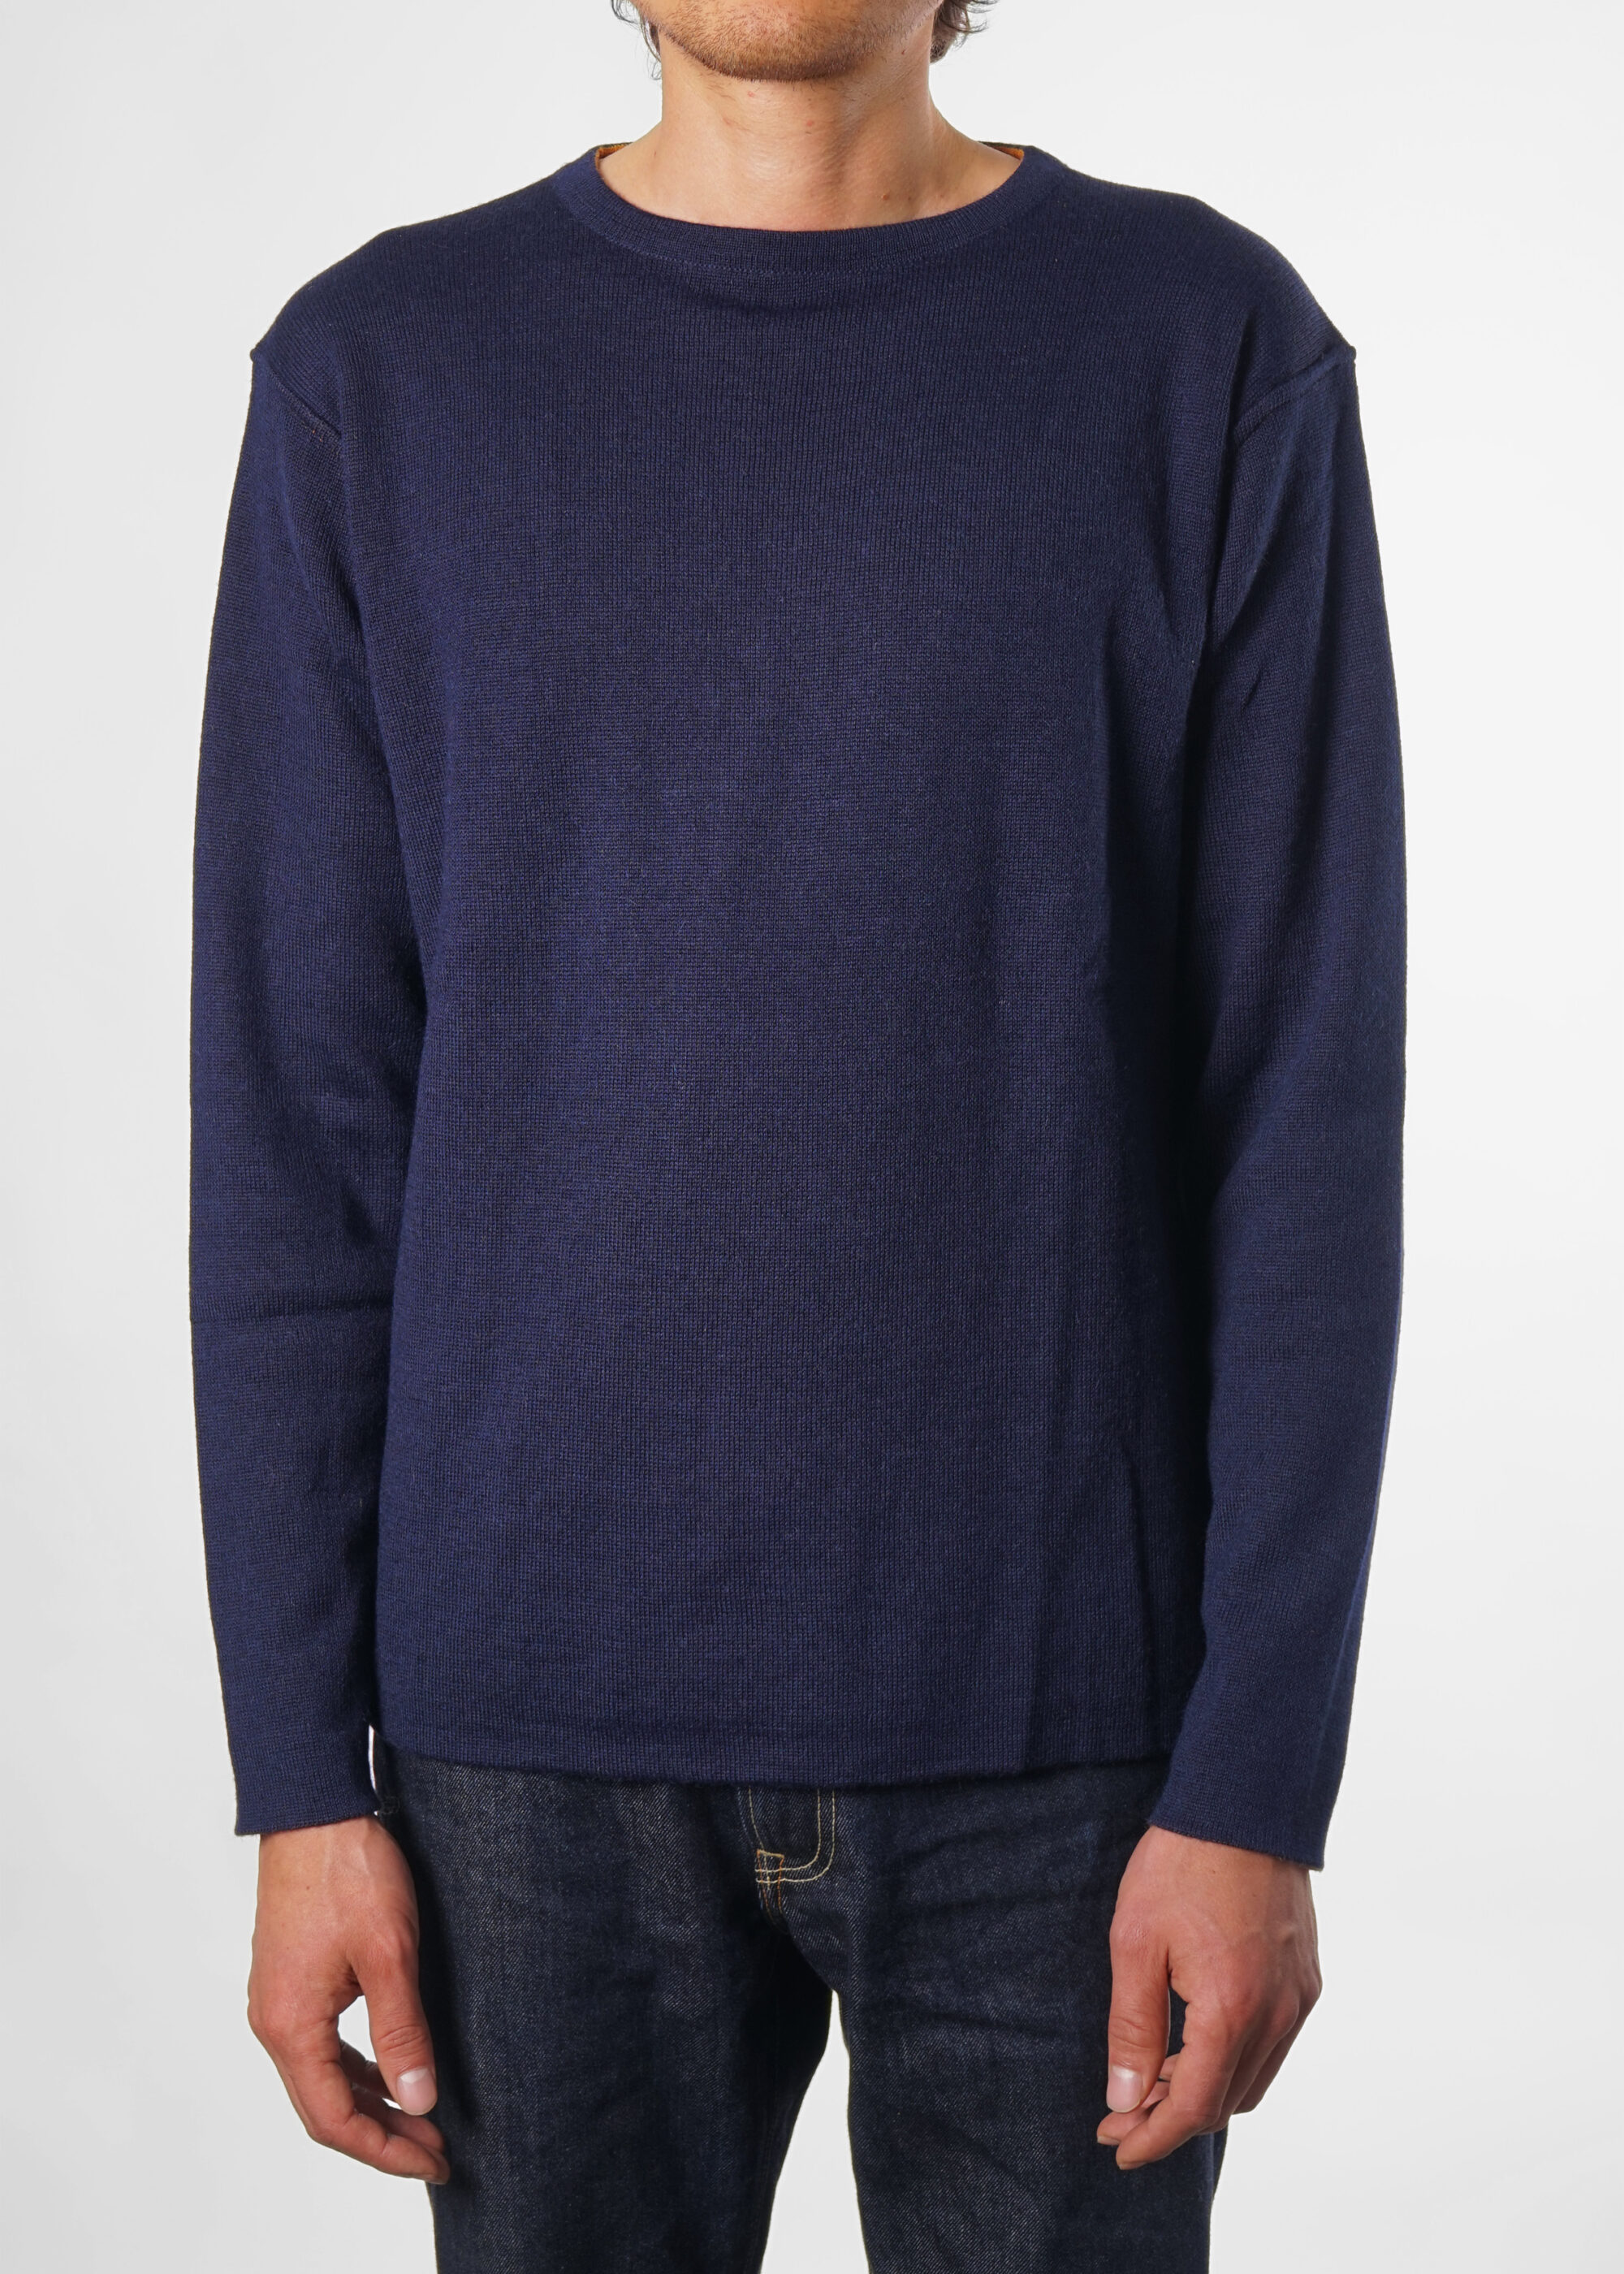 Product image for »Blauaras Ochre« Reversible Sweater Baby Alpaca | Navy Ochre